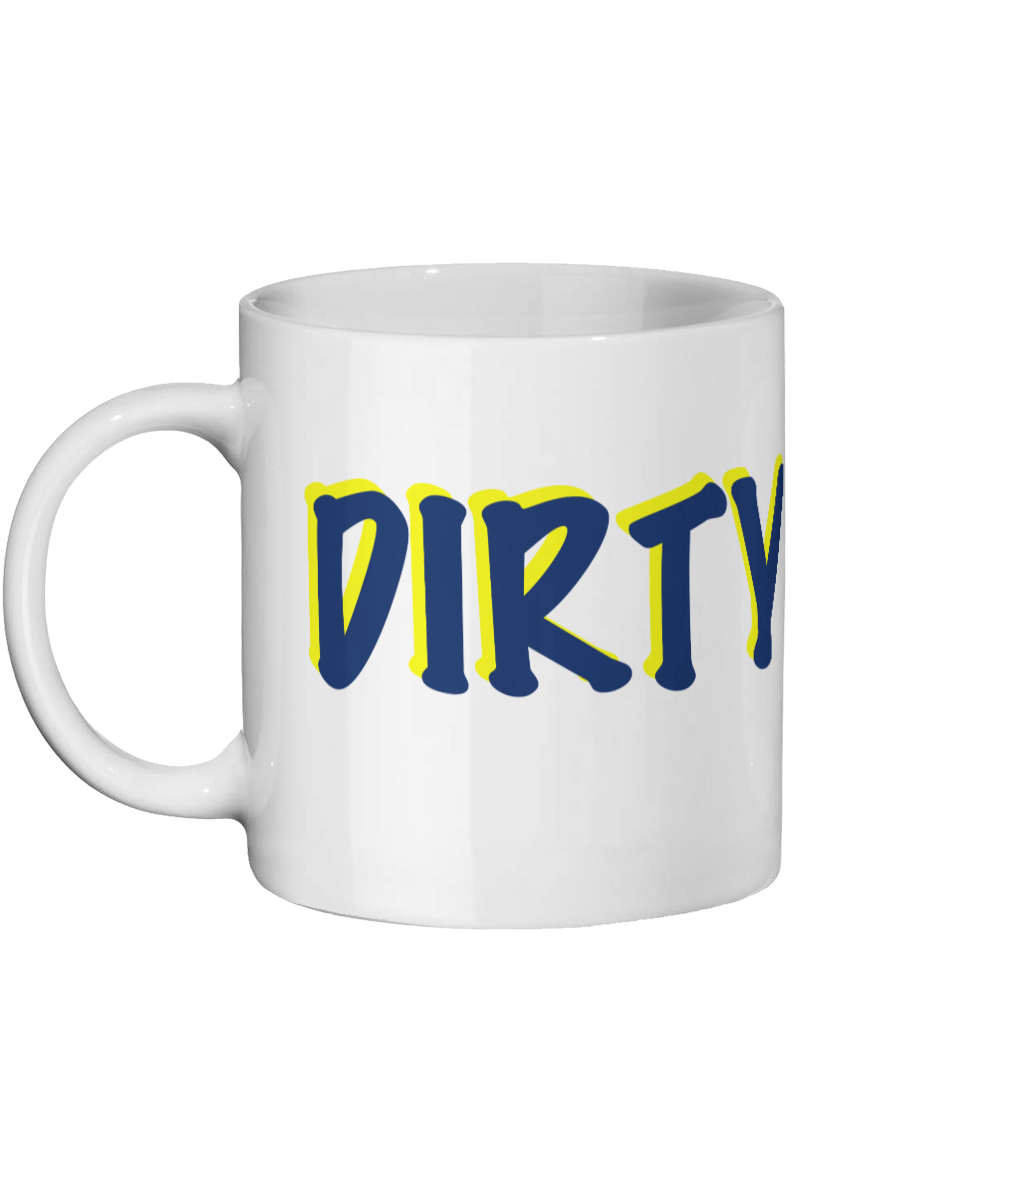 Leeds United Mug - Dirty Leeds Leeds United design for gifts - Mugs for him/her supporters